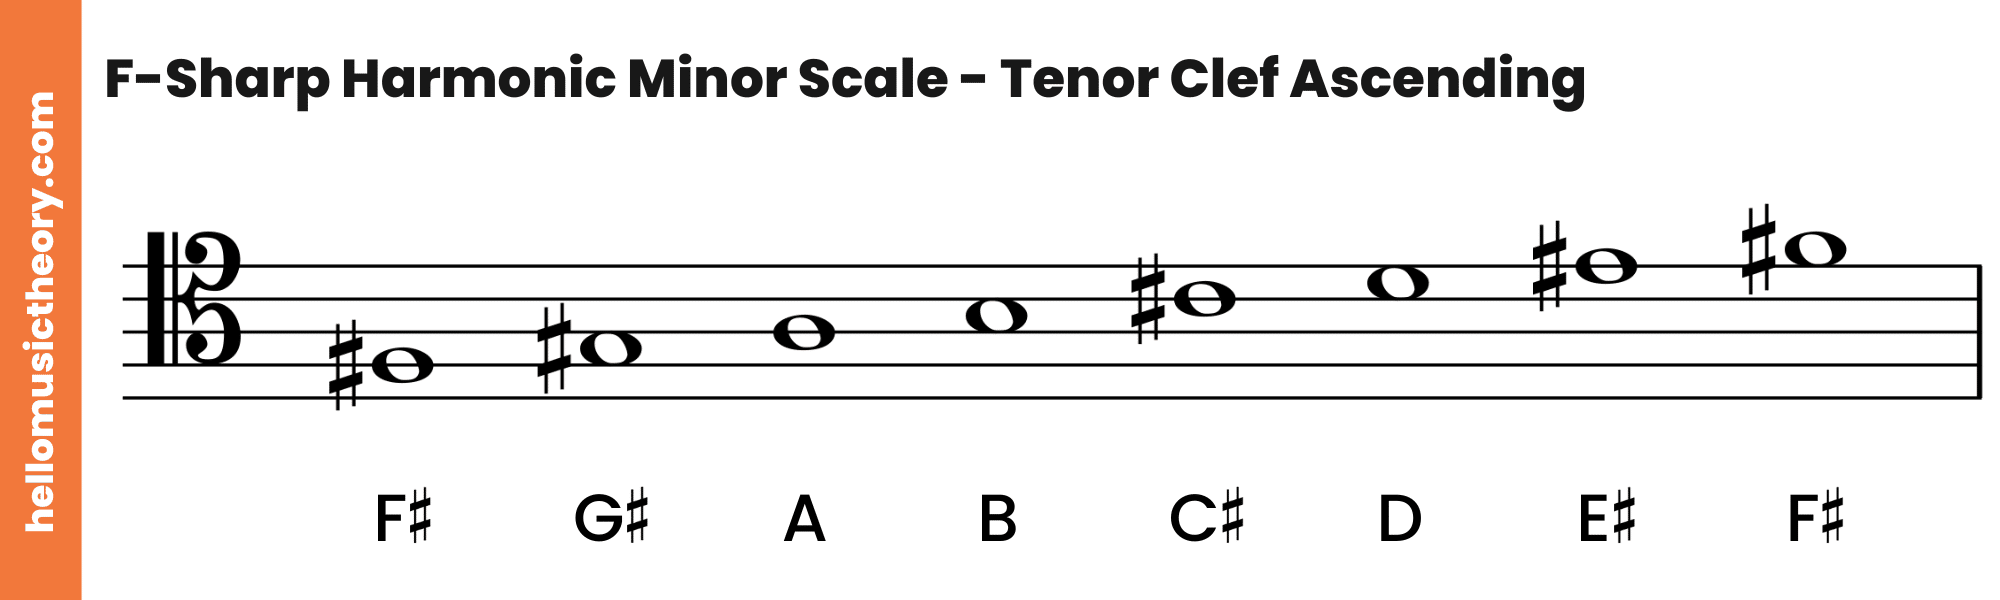 F-Sharp Harmonic Minor Scale Tenor Clef Ascending